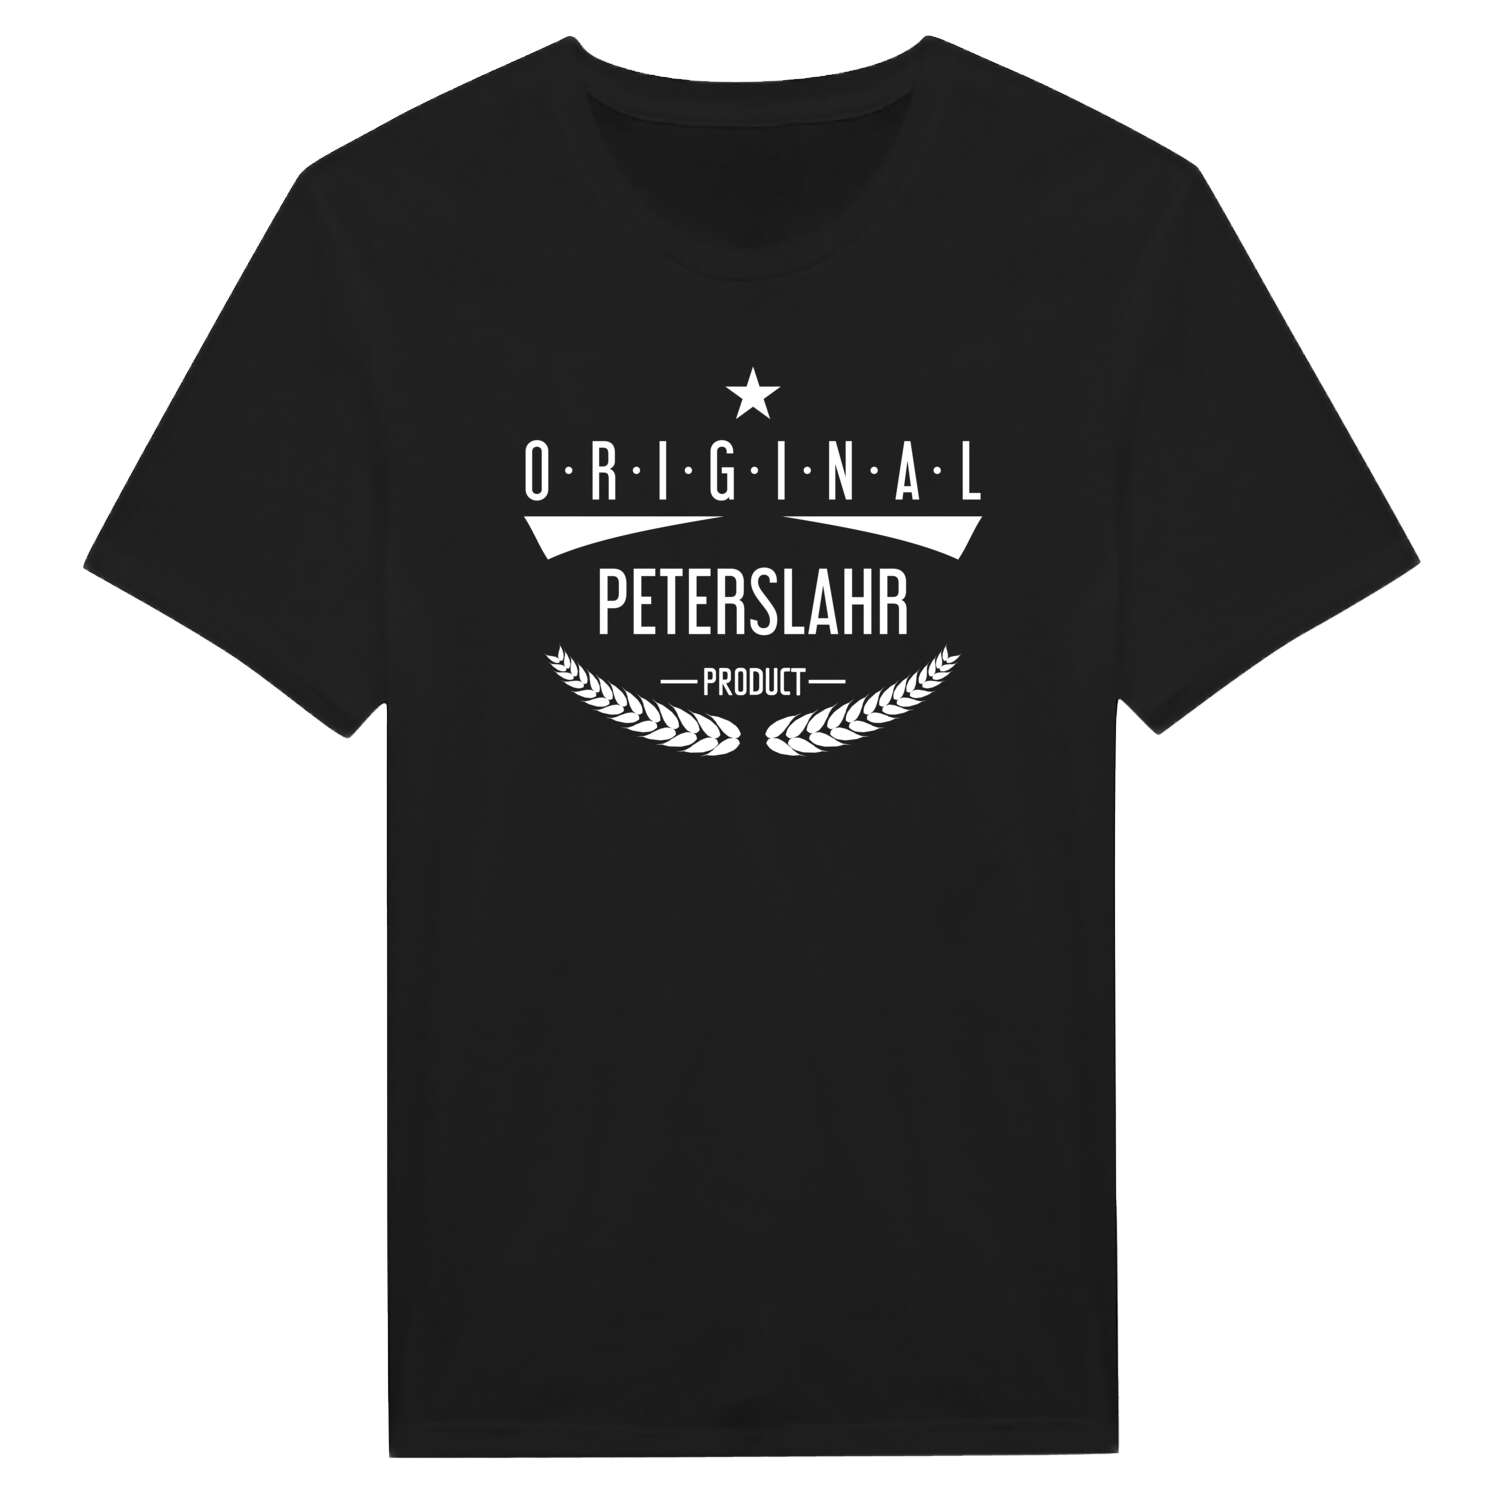 Peterslahr T-Shirt »Original Product«